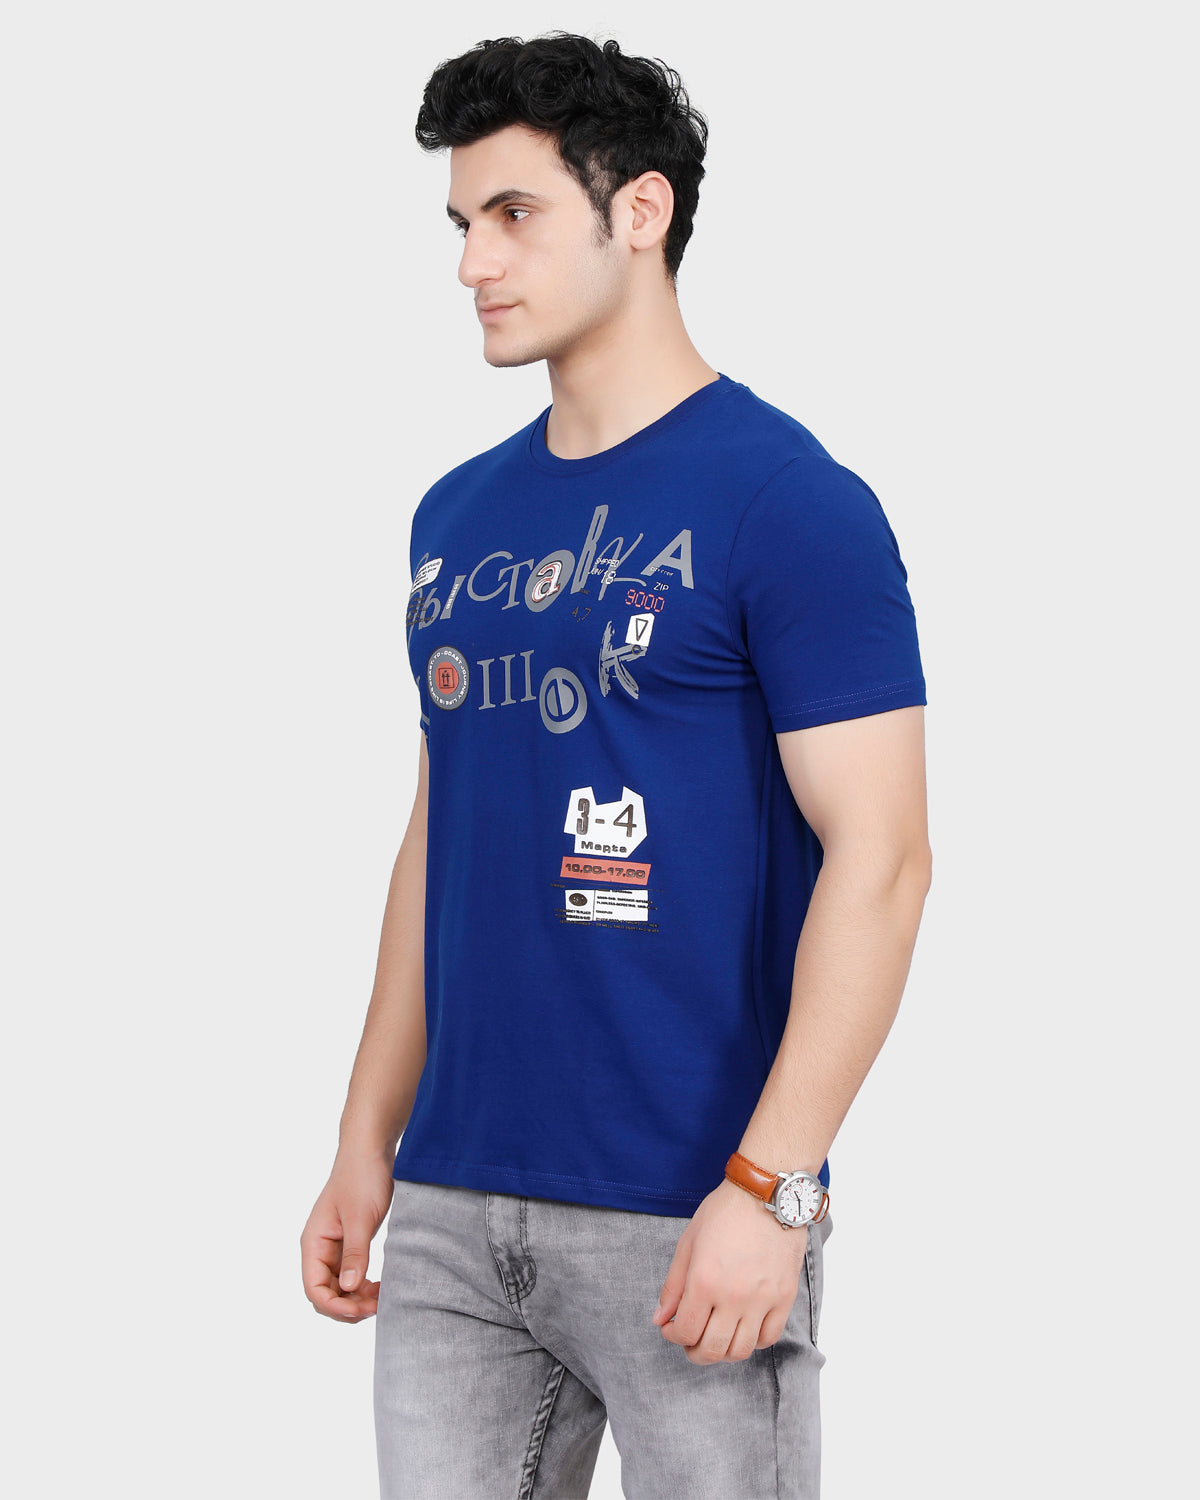 Typography Round Neck T-Shirt - Royal Blue